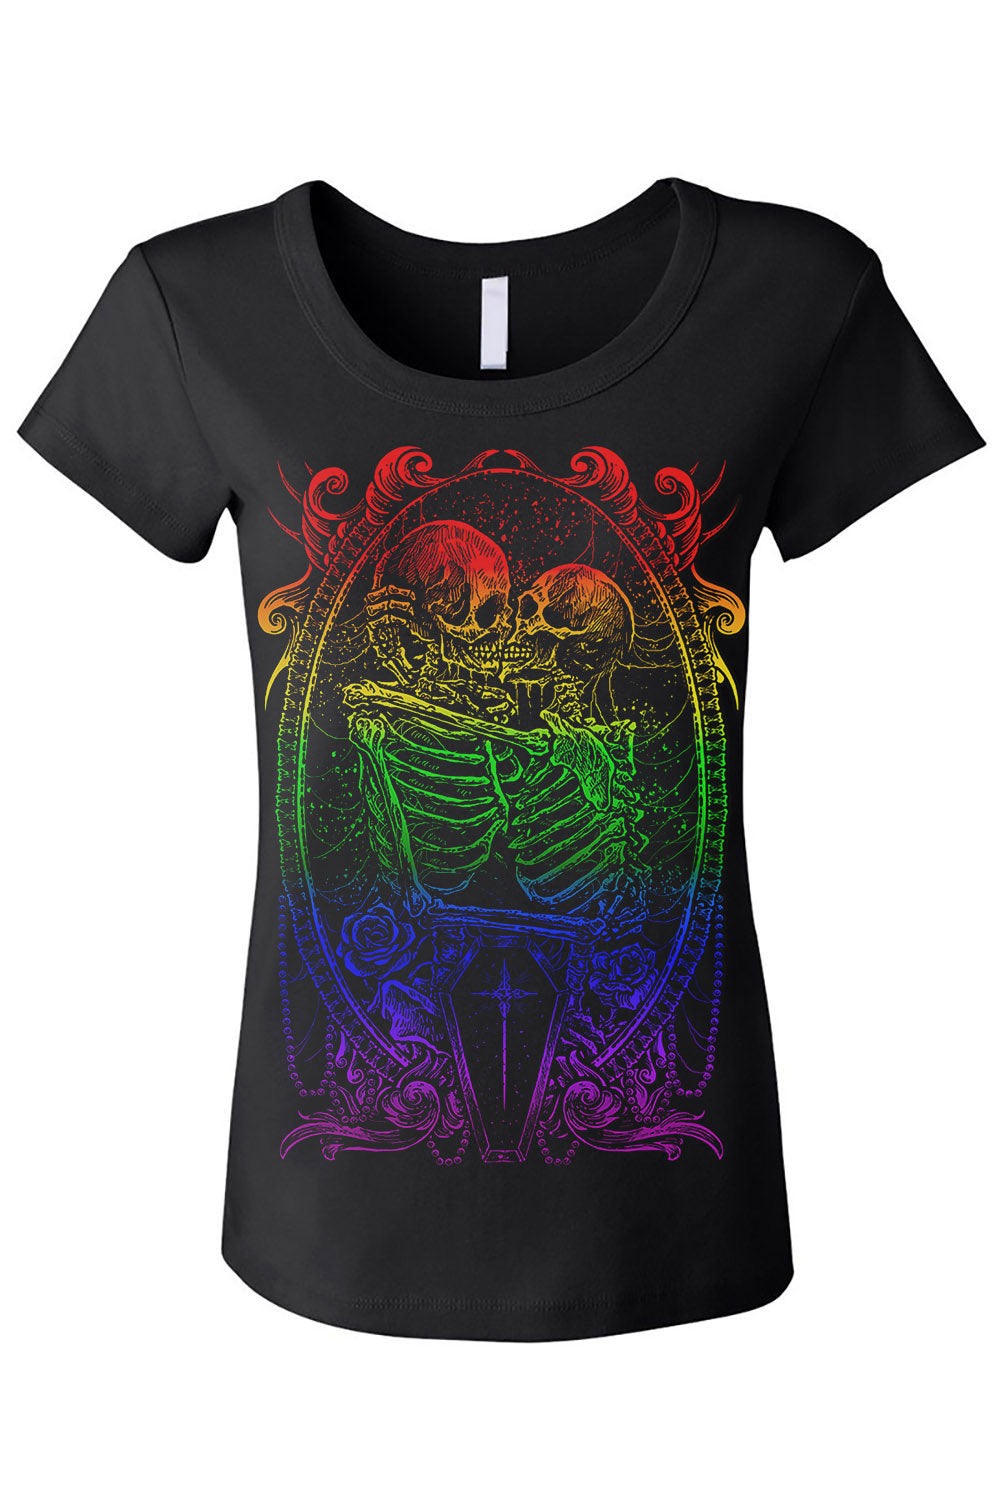 womens gothic pride rainbow t-shirt